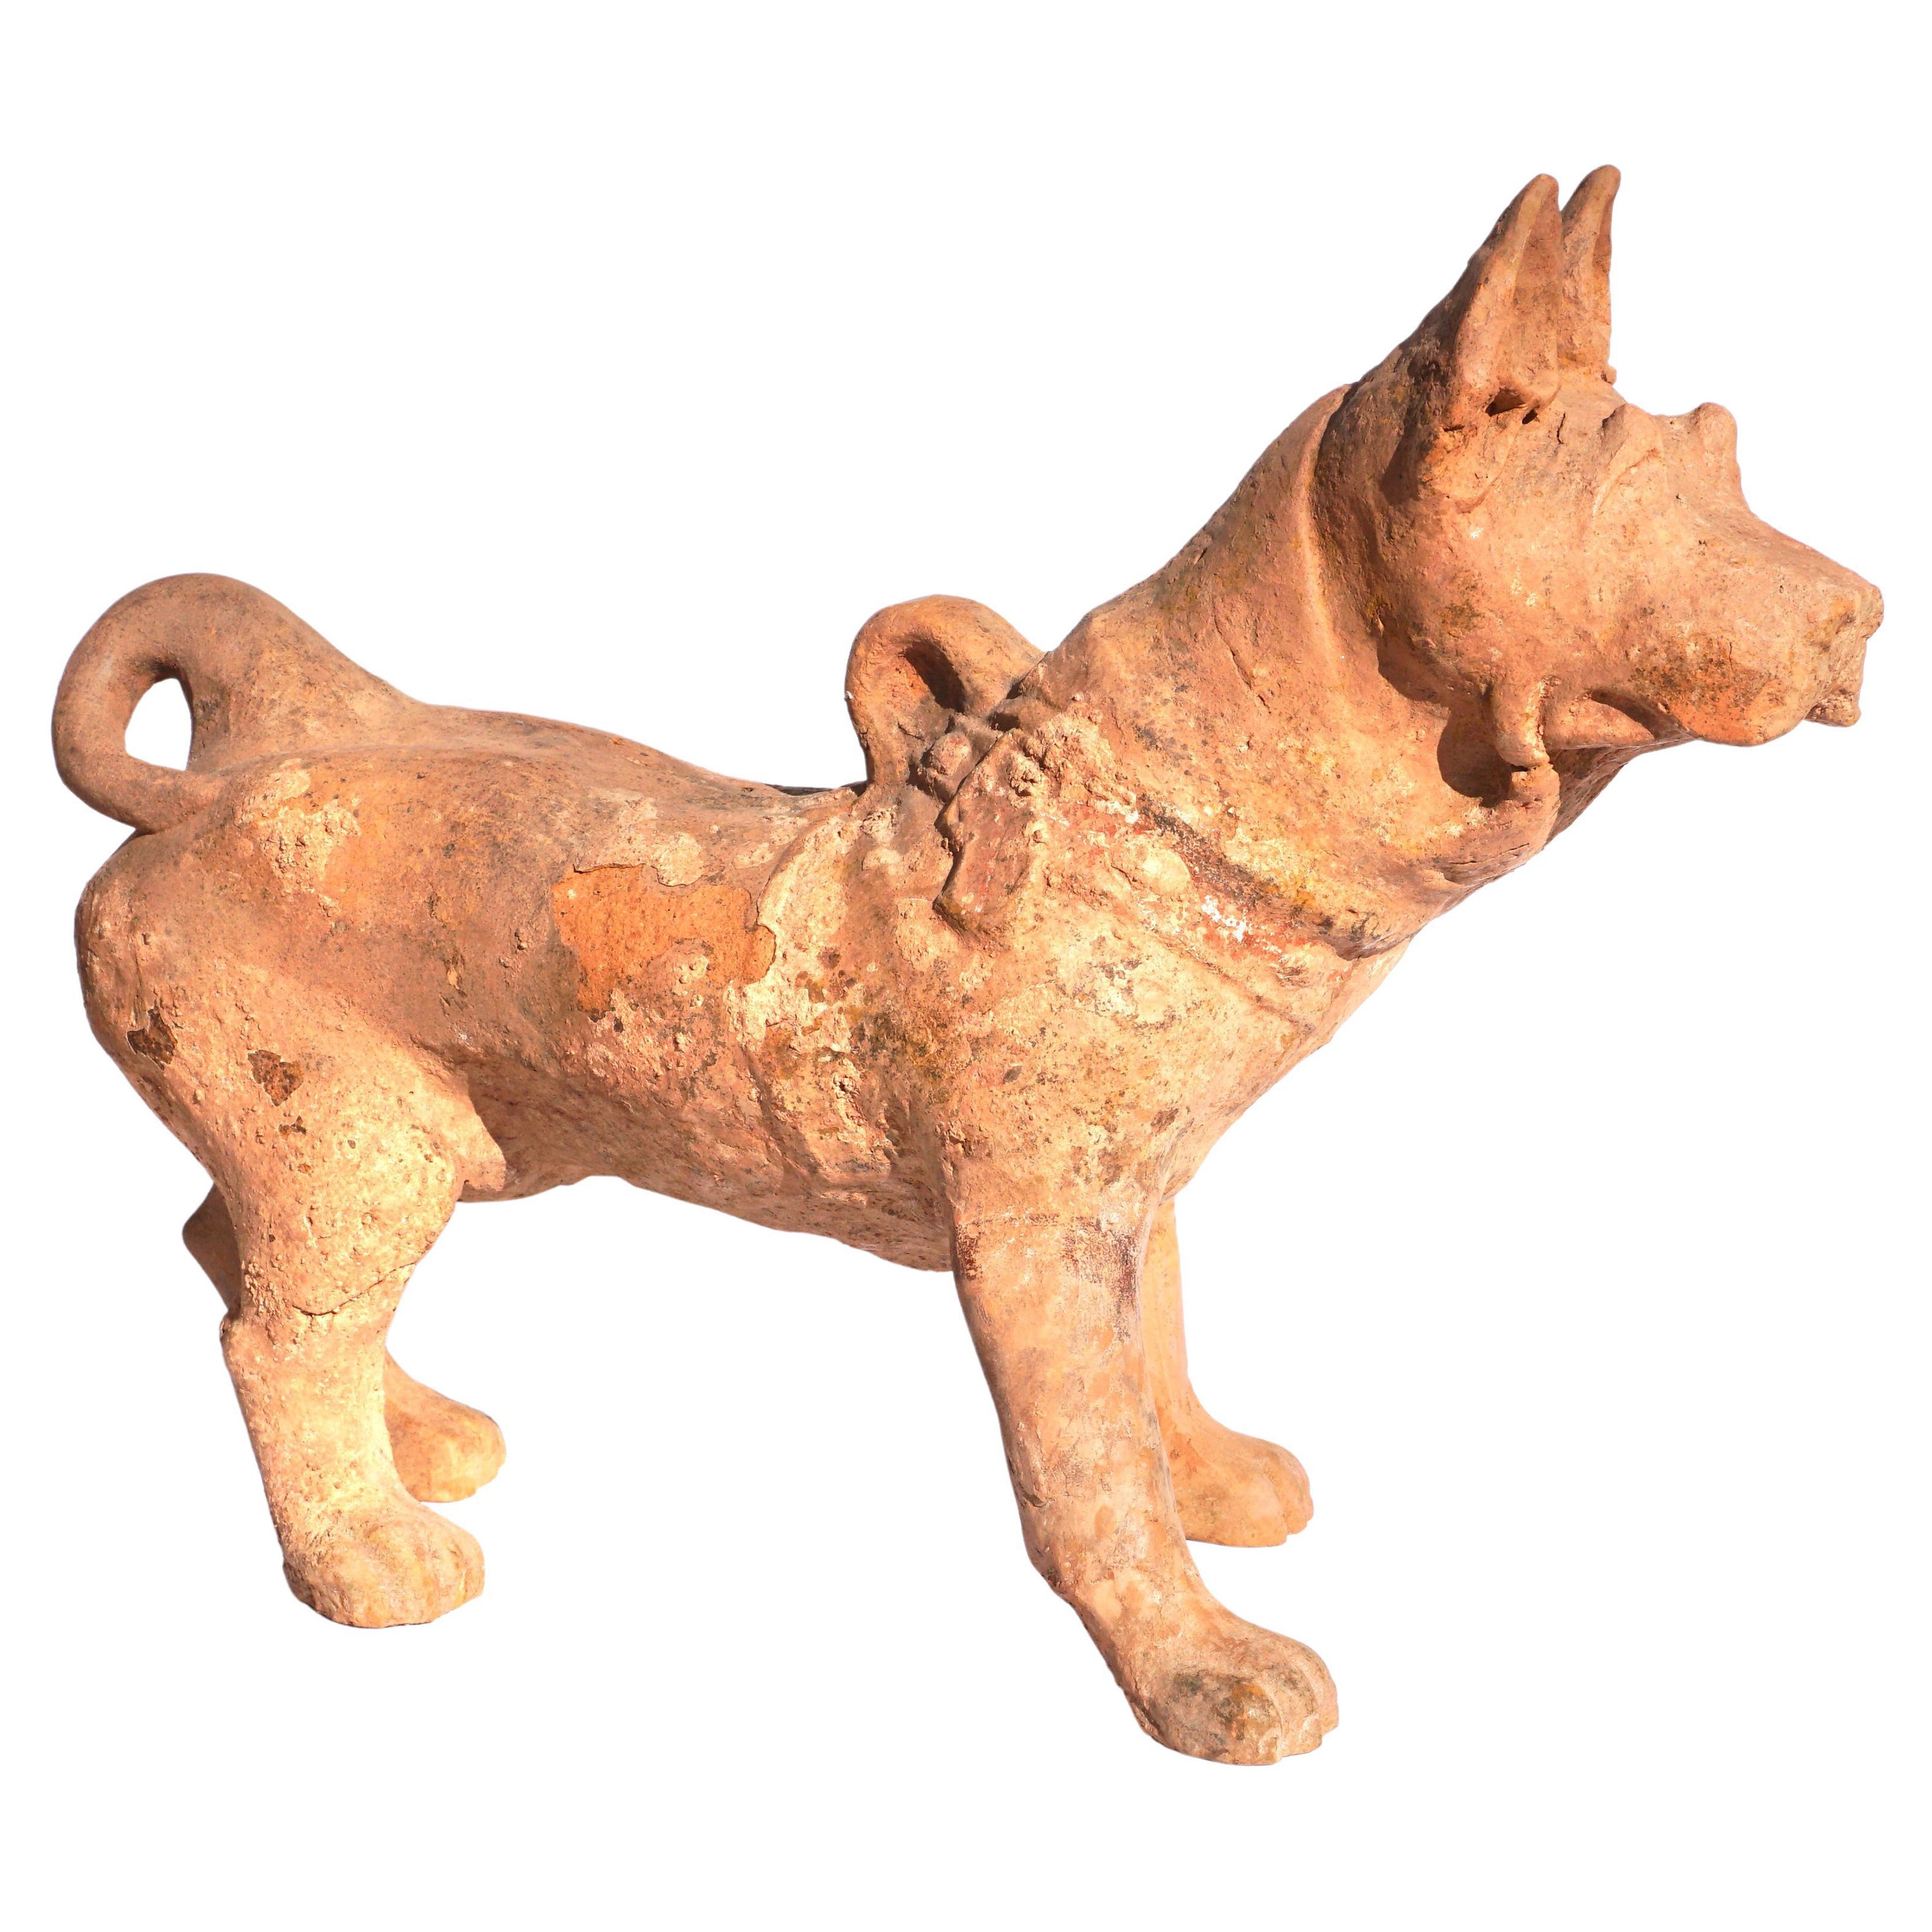 Große Han Dynasty Keramik-Skulptur eines Hundes